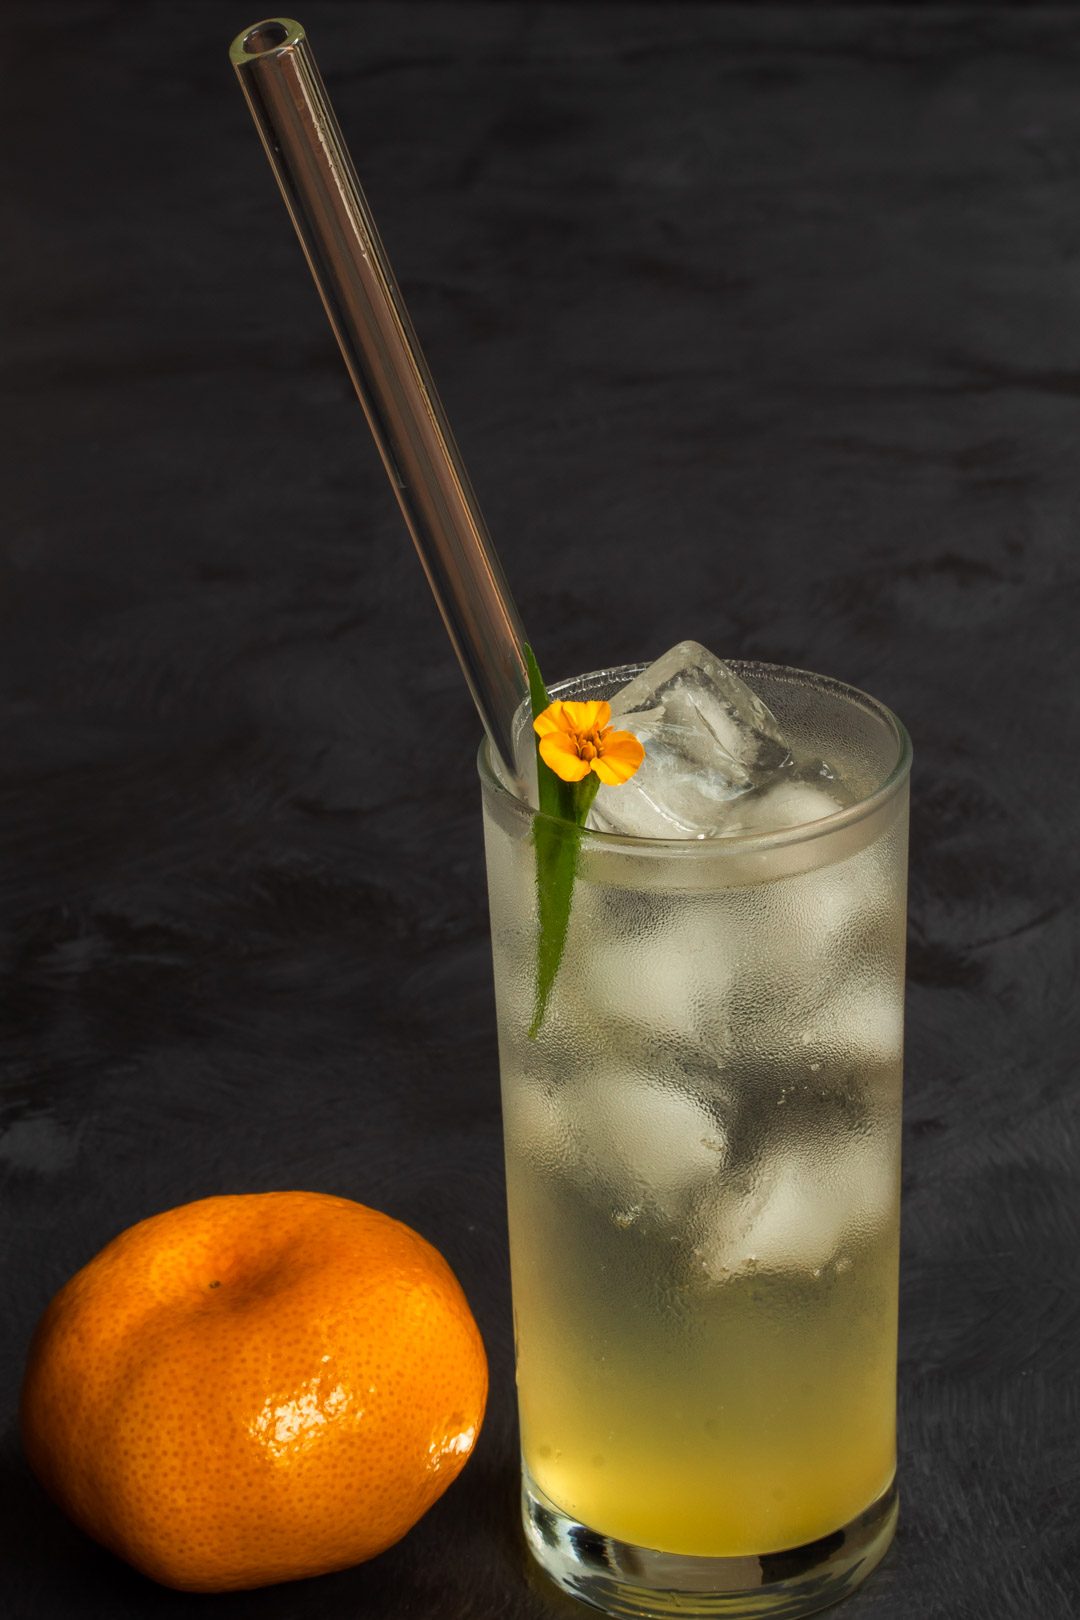 Mandarin tarragon shrub syrup drinking vinegar with mandarin in foreground from 45 degrees